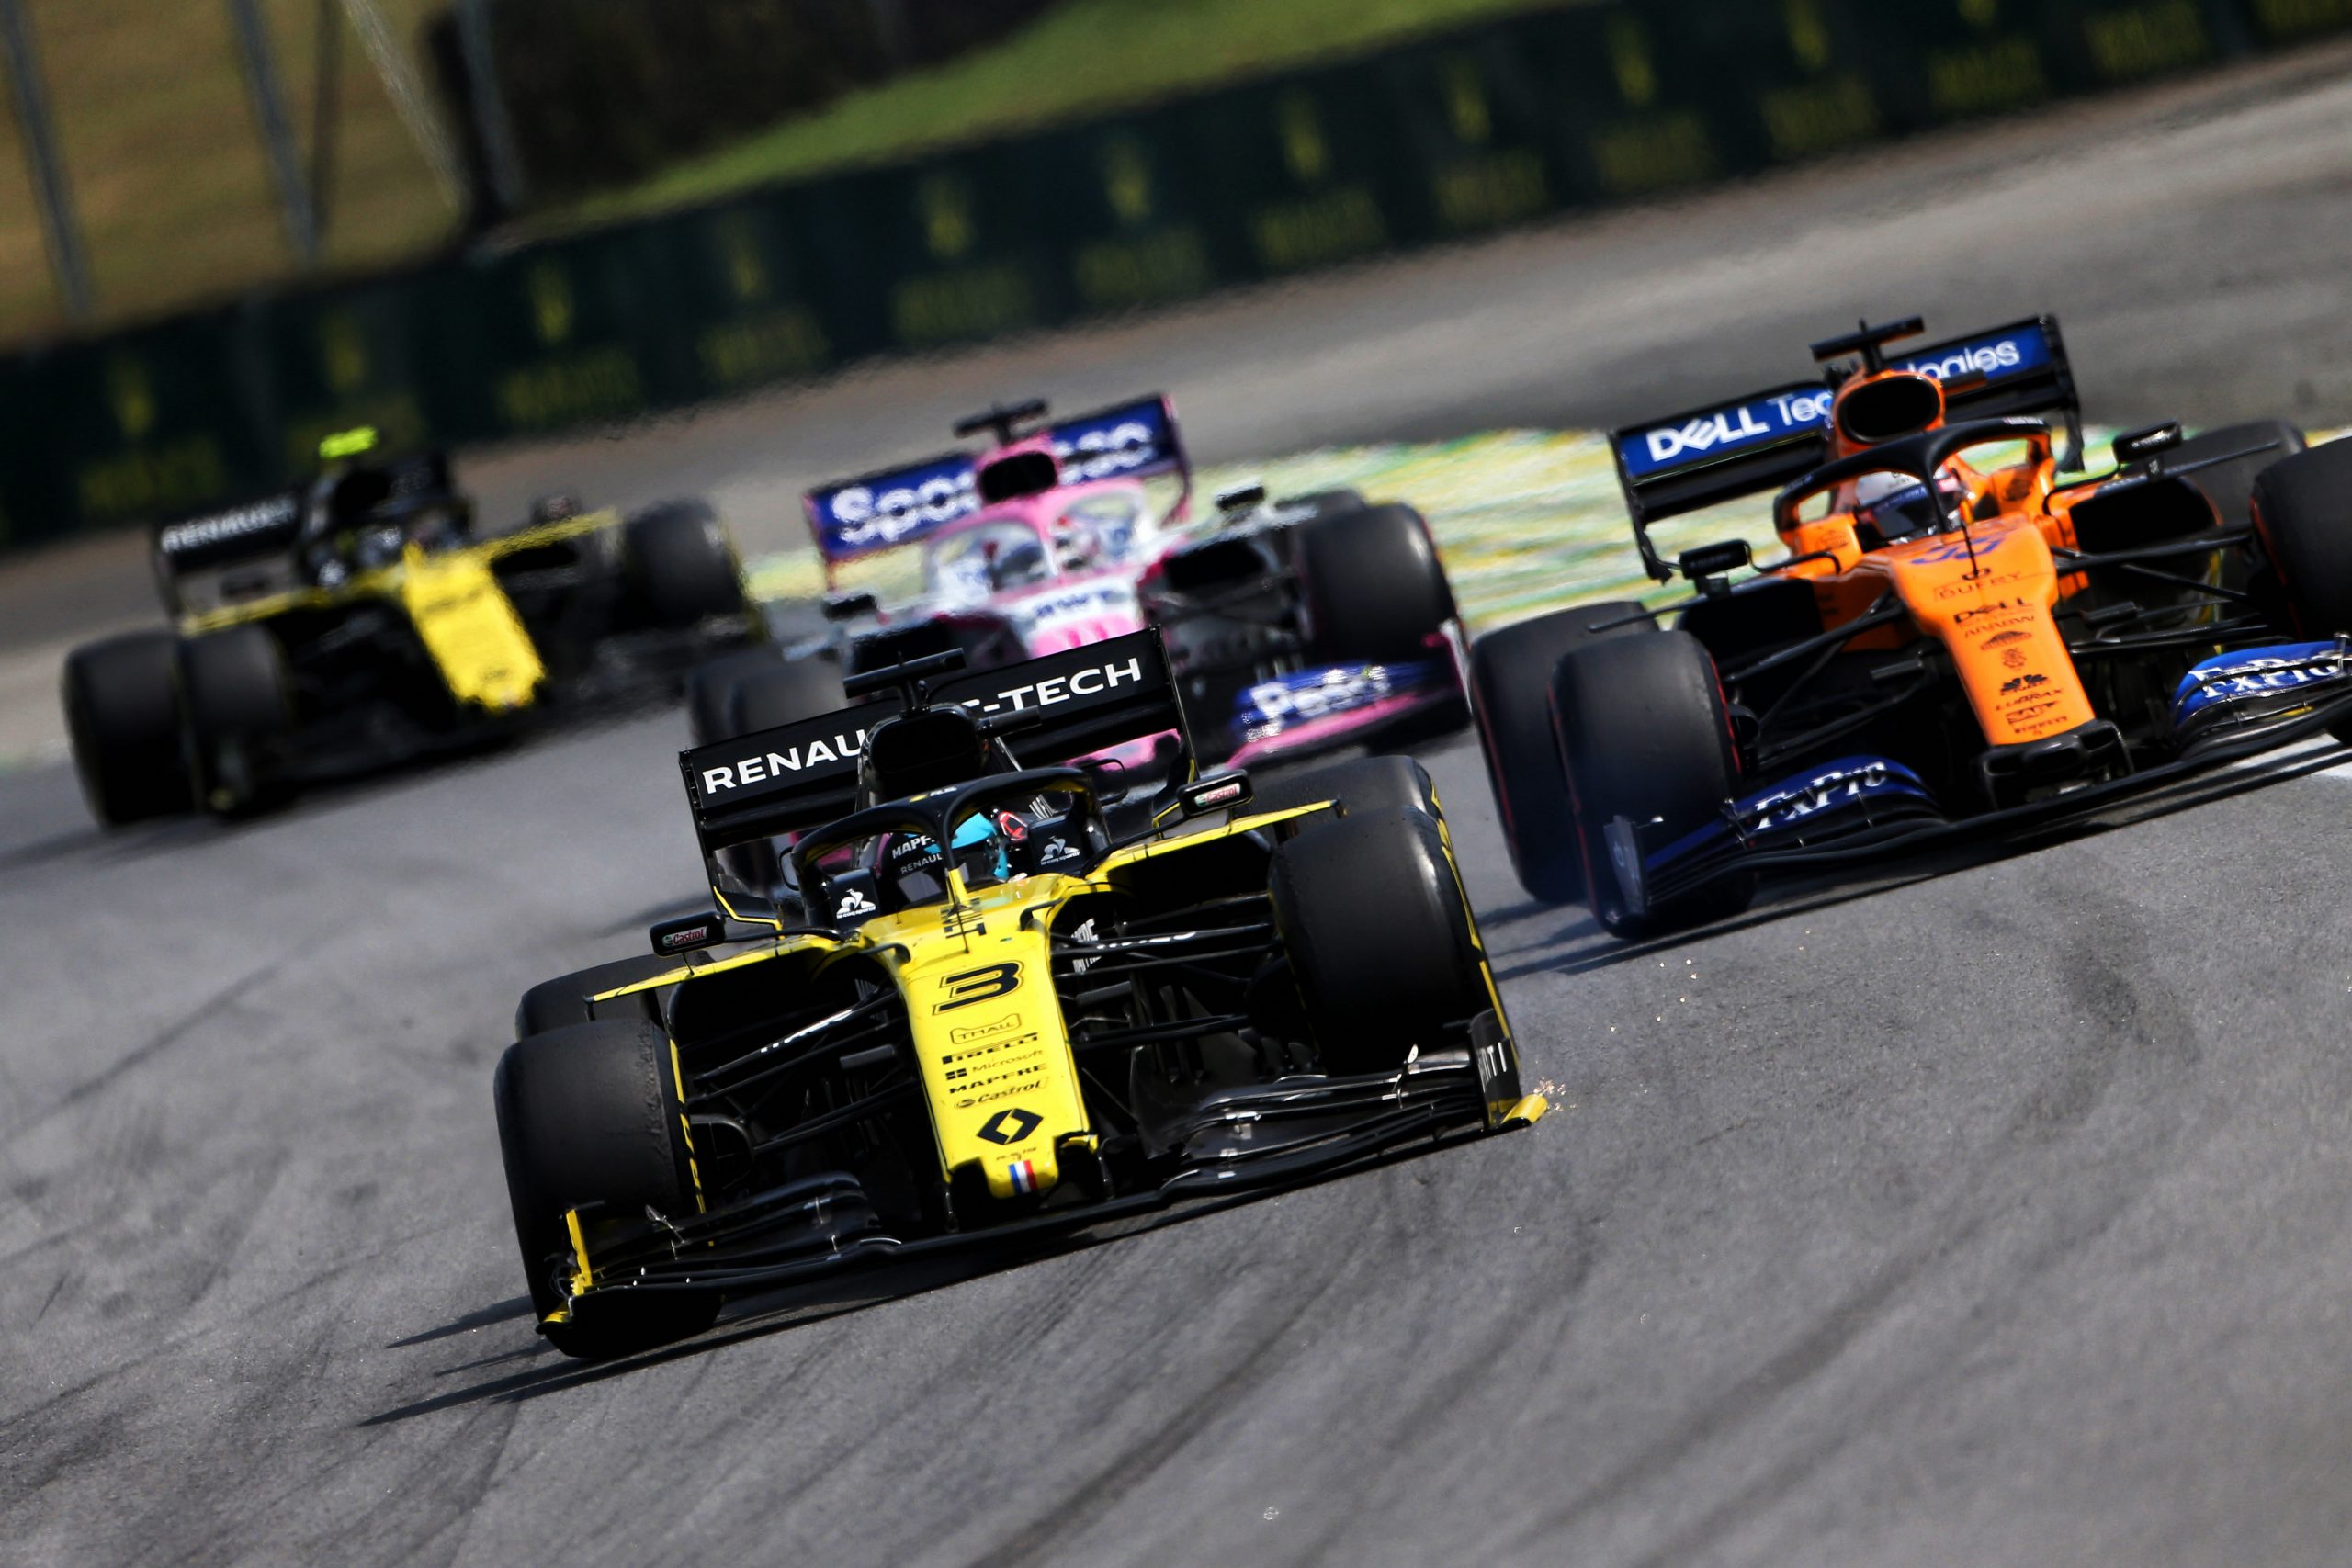 F1 - Sixième à l'arrivée, Daniel Ricciardo s'en sort bien à Interlagos